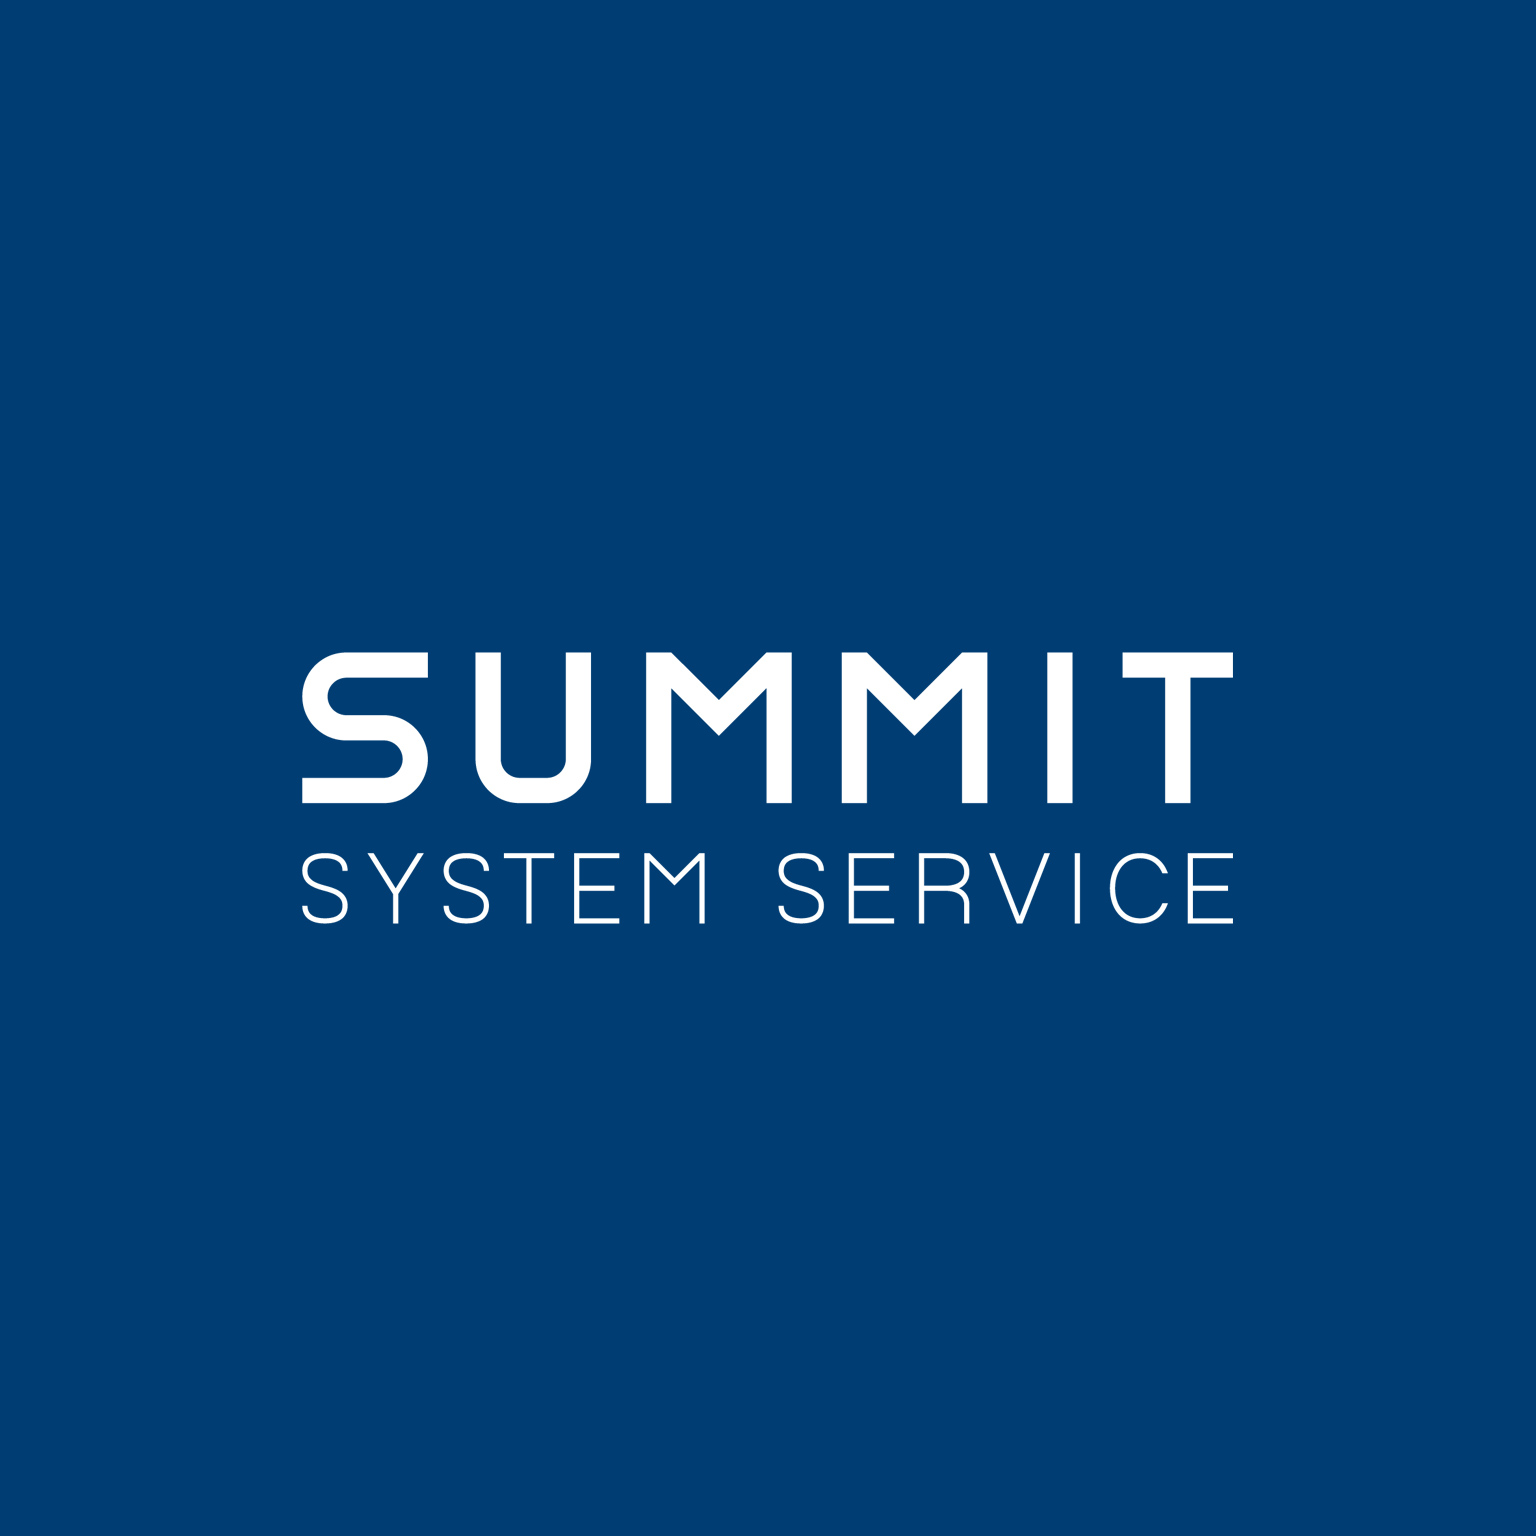 SUMMIT System Service Logo